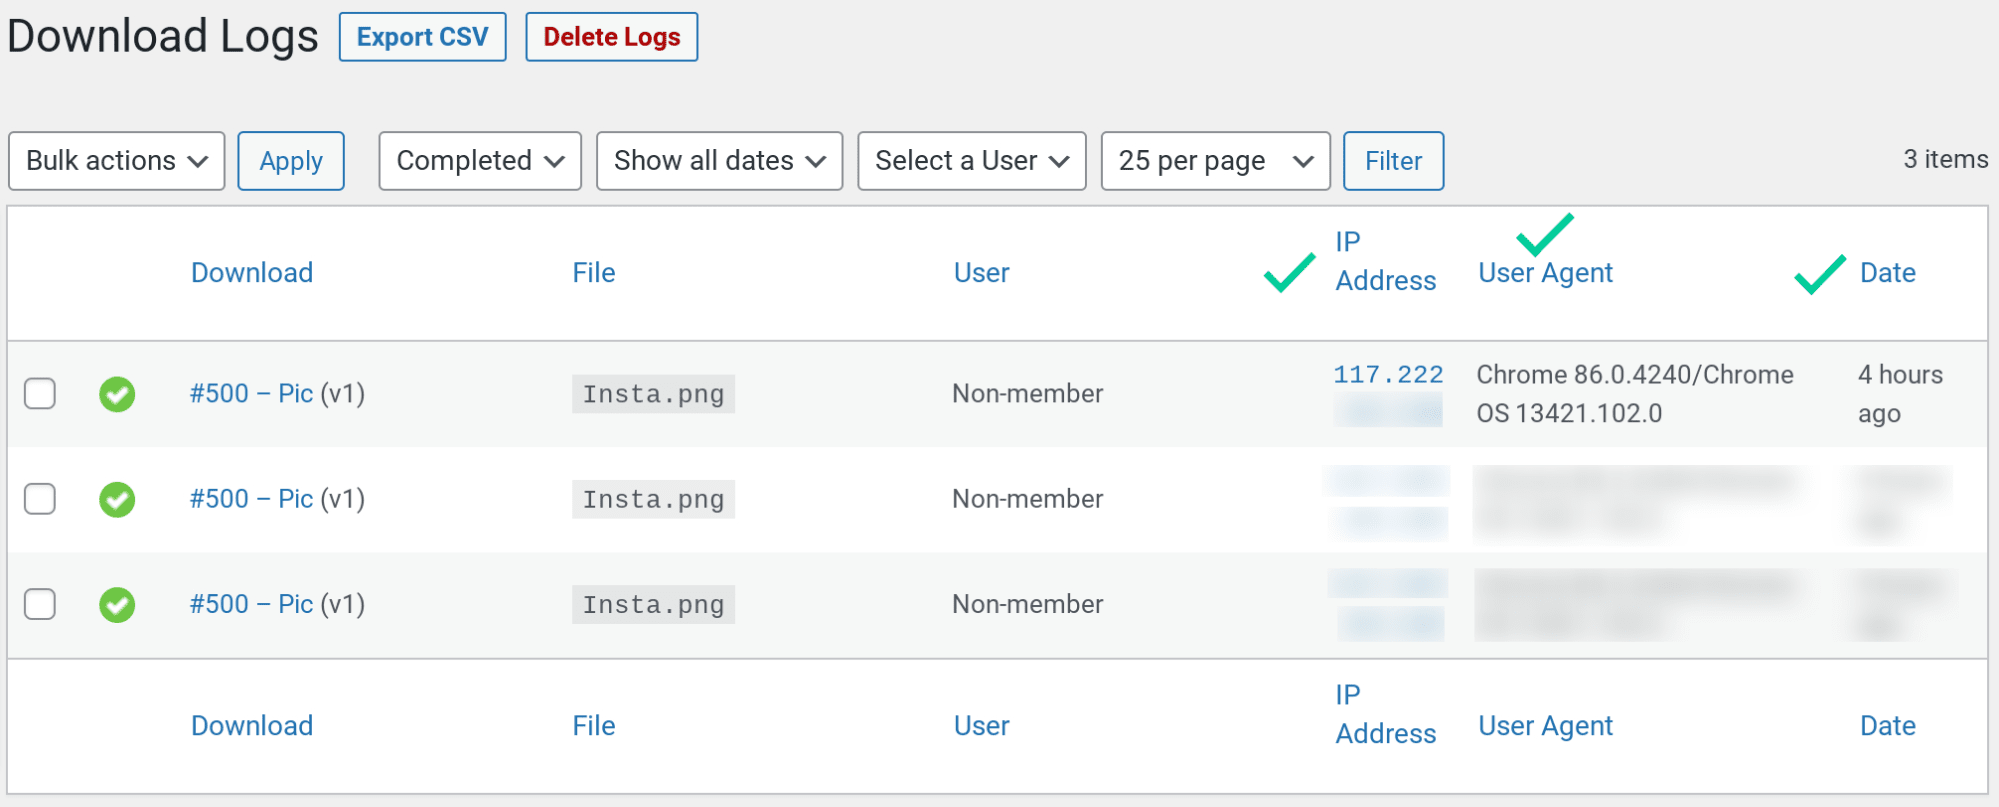 Download logs registering additional download data